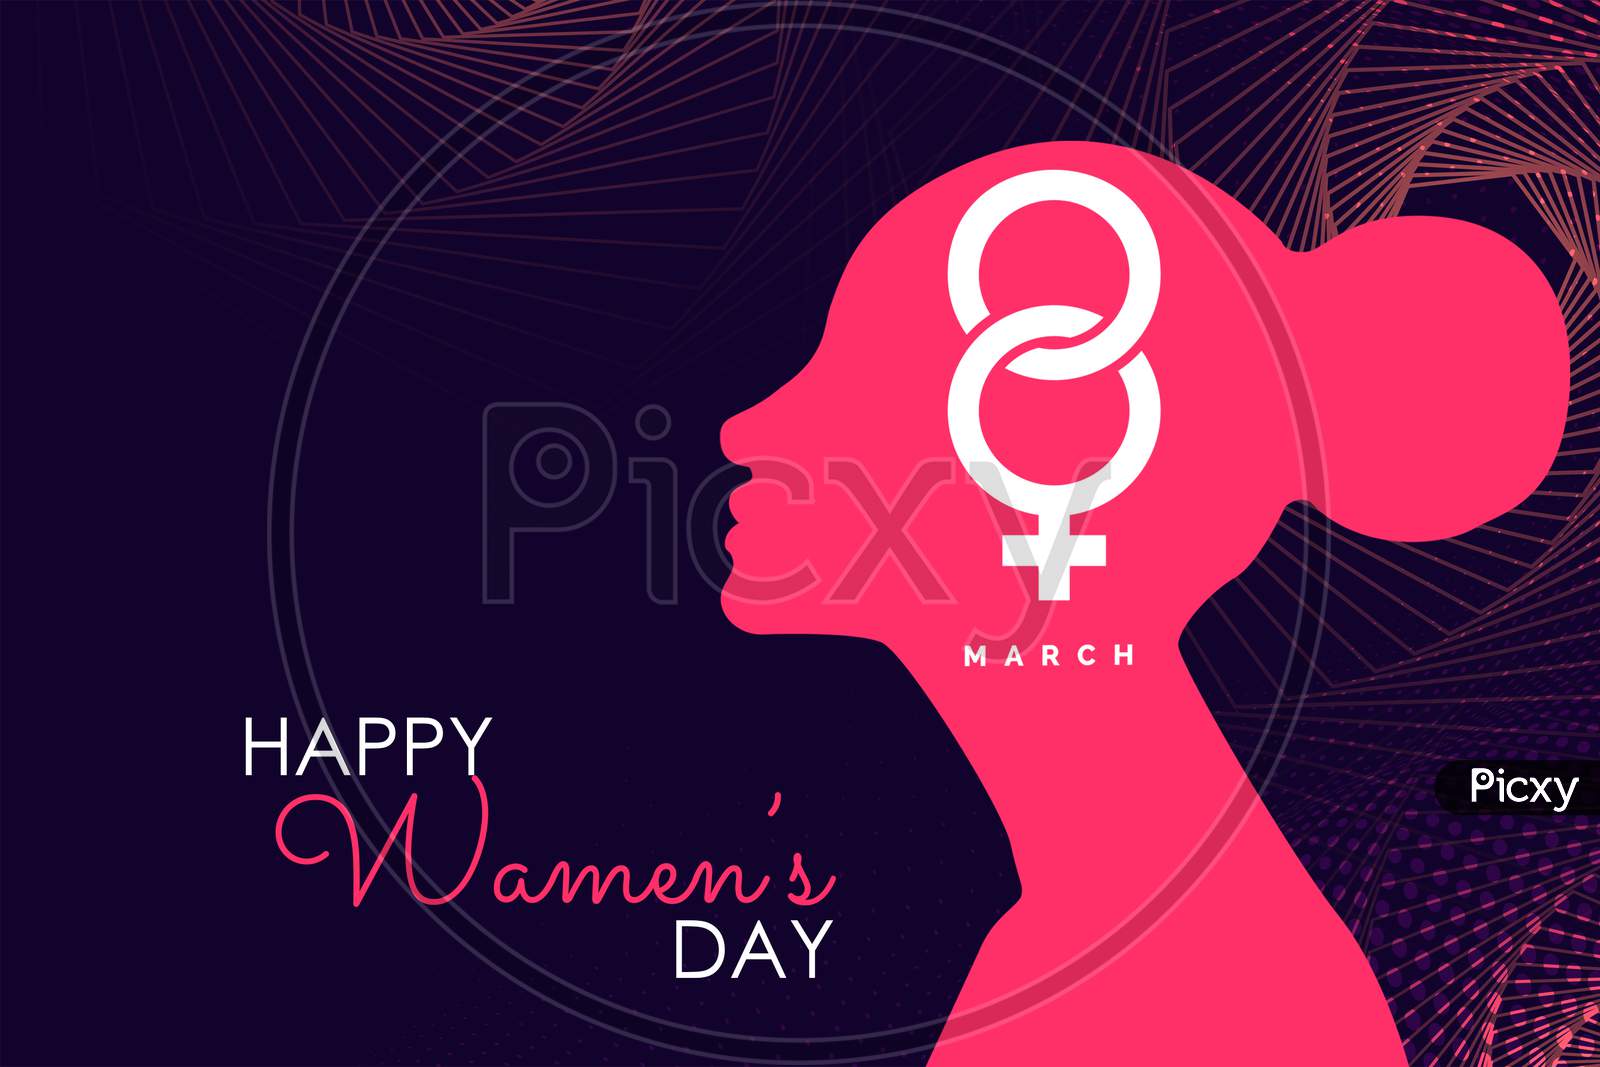 International Women'S Day - 8 Th March